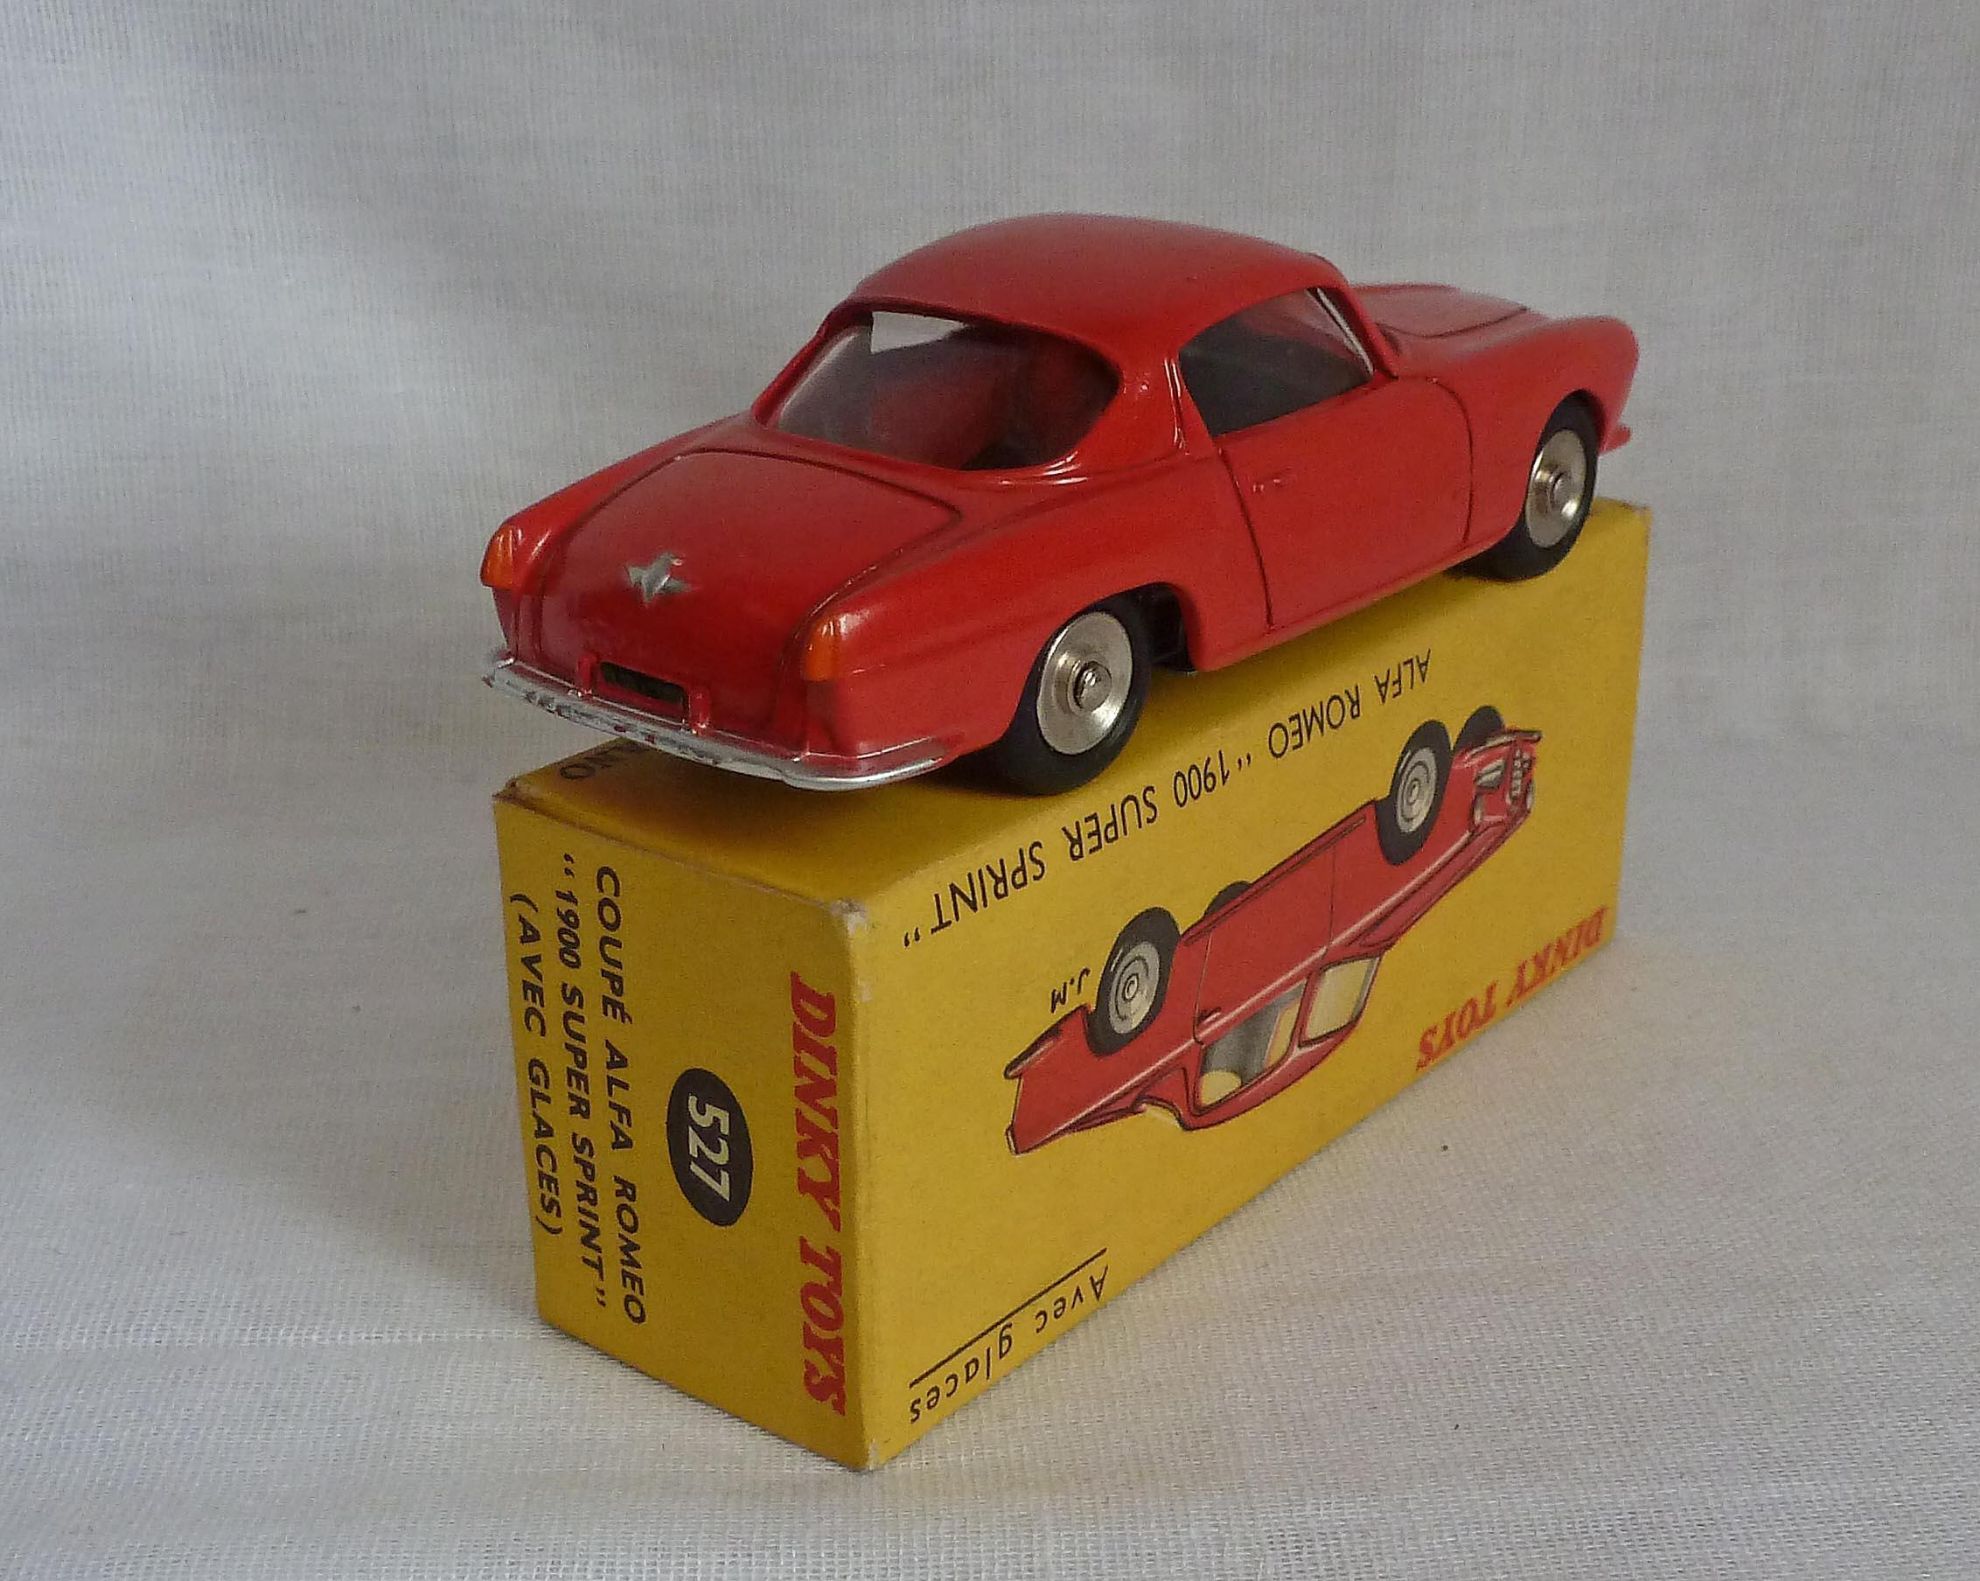 French Dinky Toys 527 [24J] Alfa Romeo 1900 Super Sprint Red